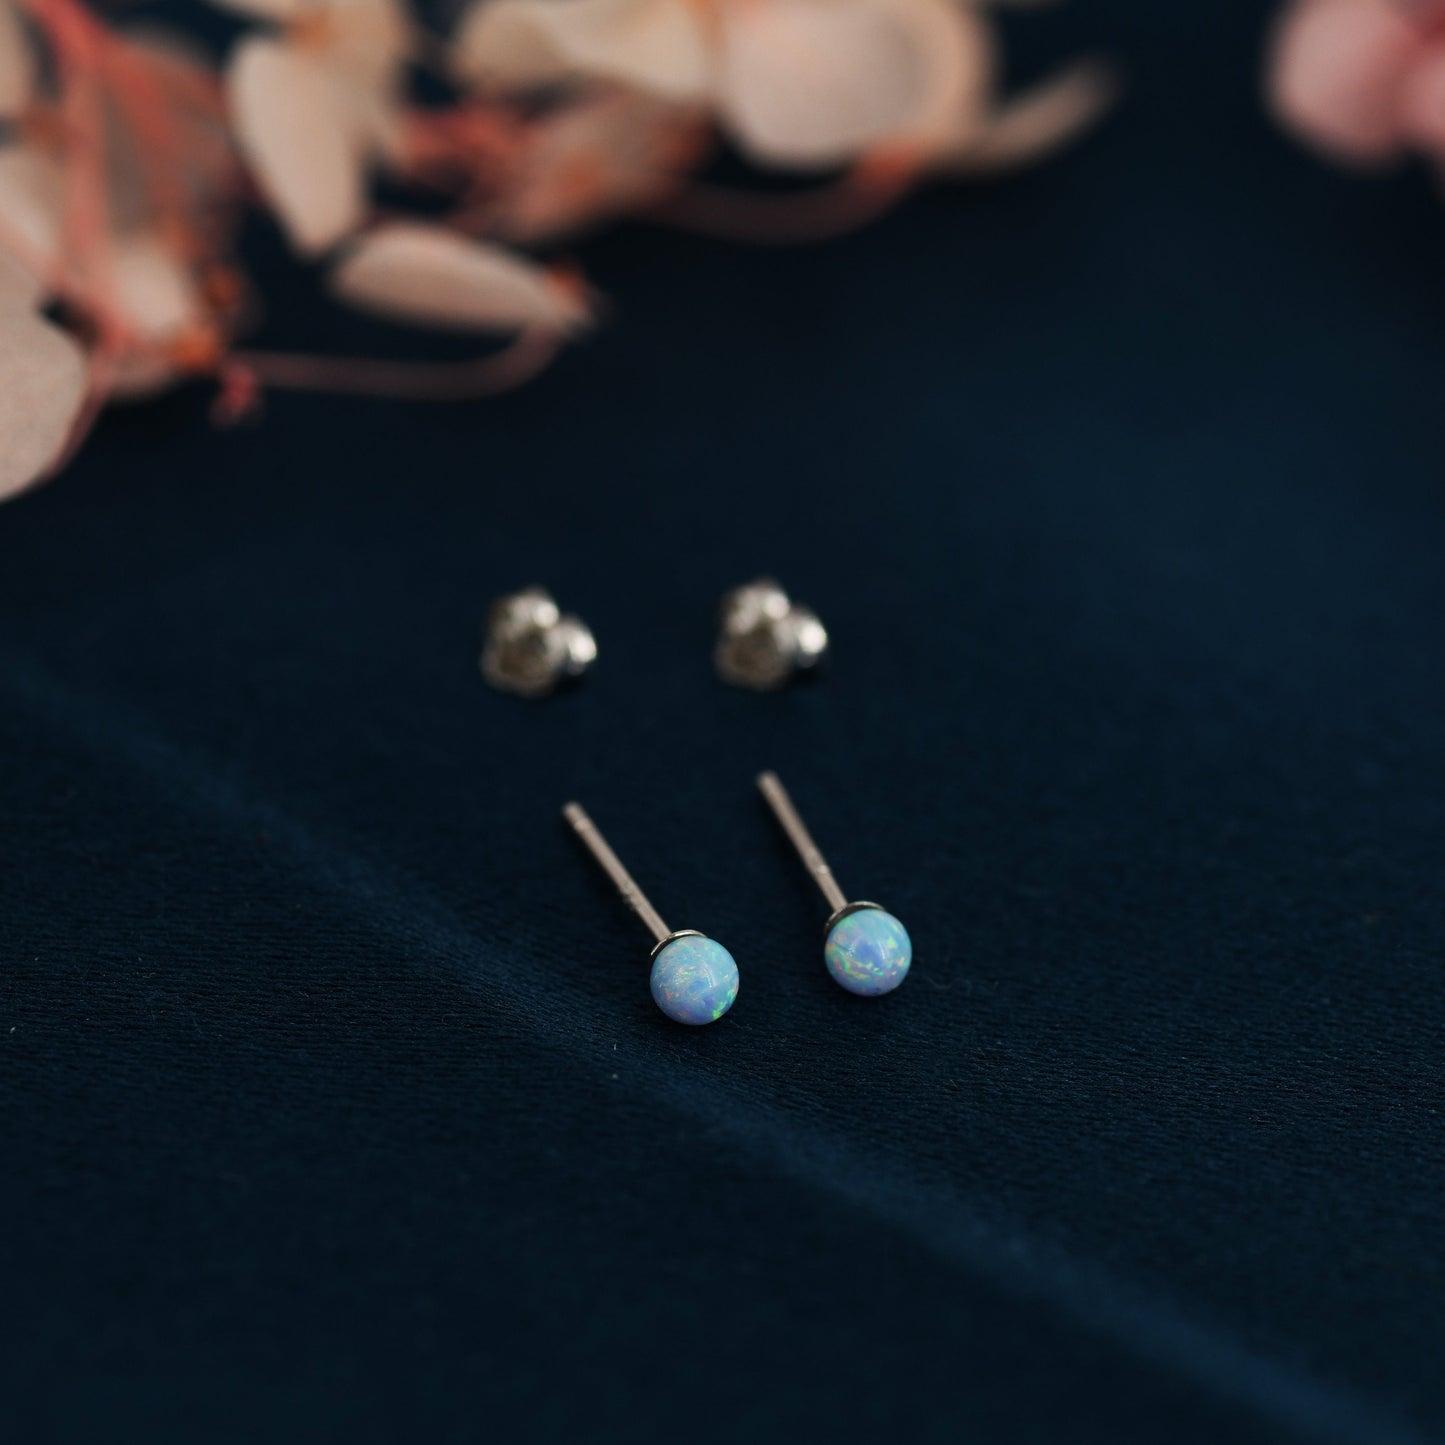 Comic Blue Opal Stud Earrings in Sterling Silver - Pale Blue Opal Stud, 3mm Opal Ball Stud Earrings, Extra Tiny Opal Stud